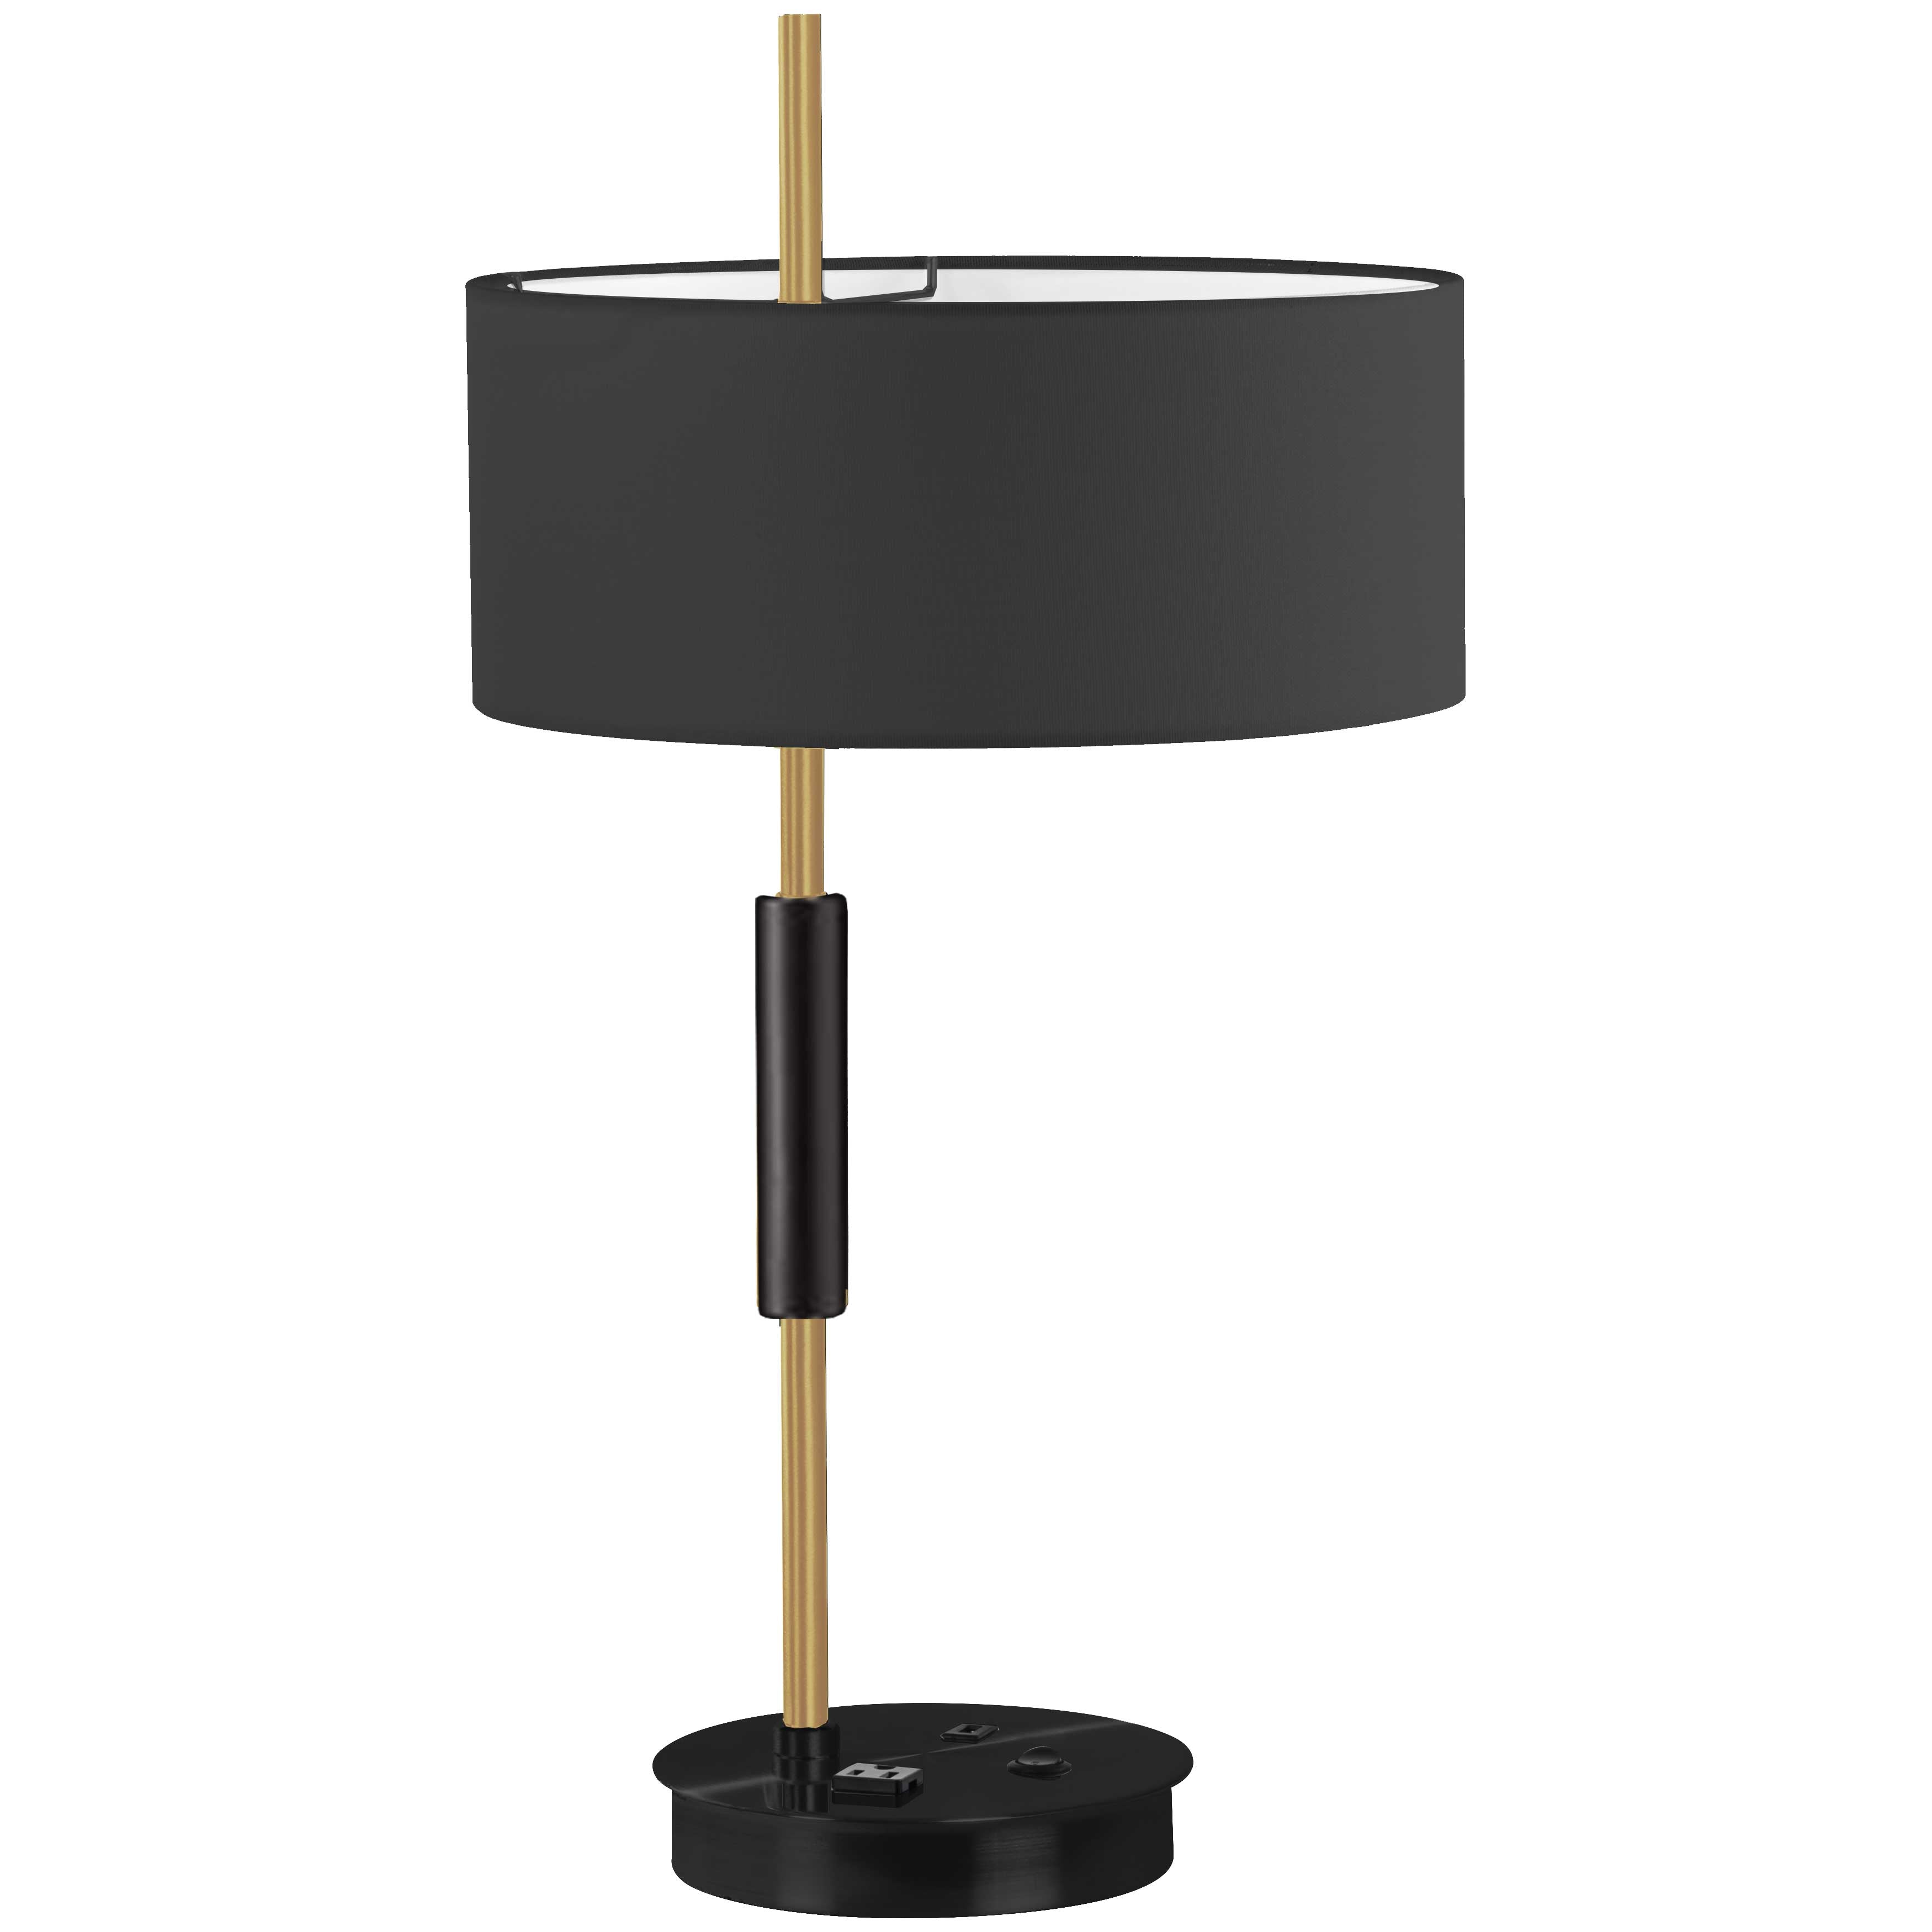 FITZGERALD Lampe sur table Noir, Or - FTG-261T-MB-AGB-BK | DAINOLITE